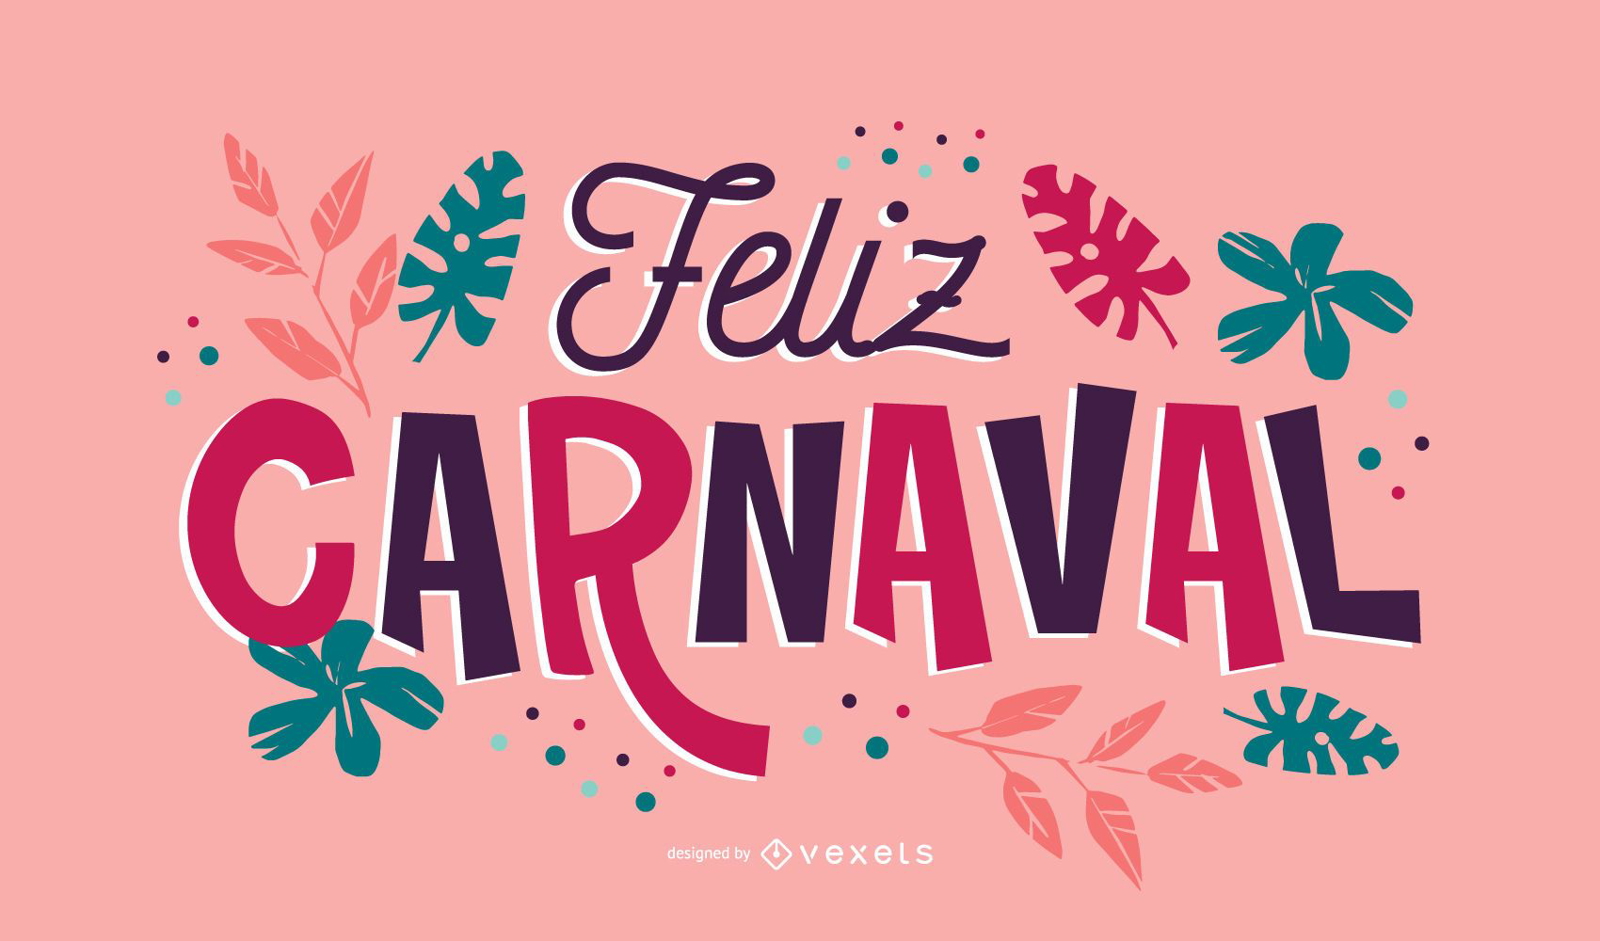 Carnival Spanish Quote Design